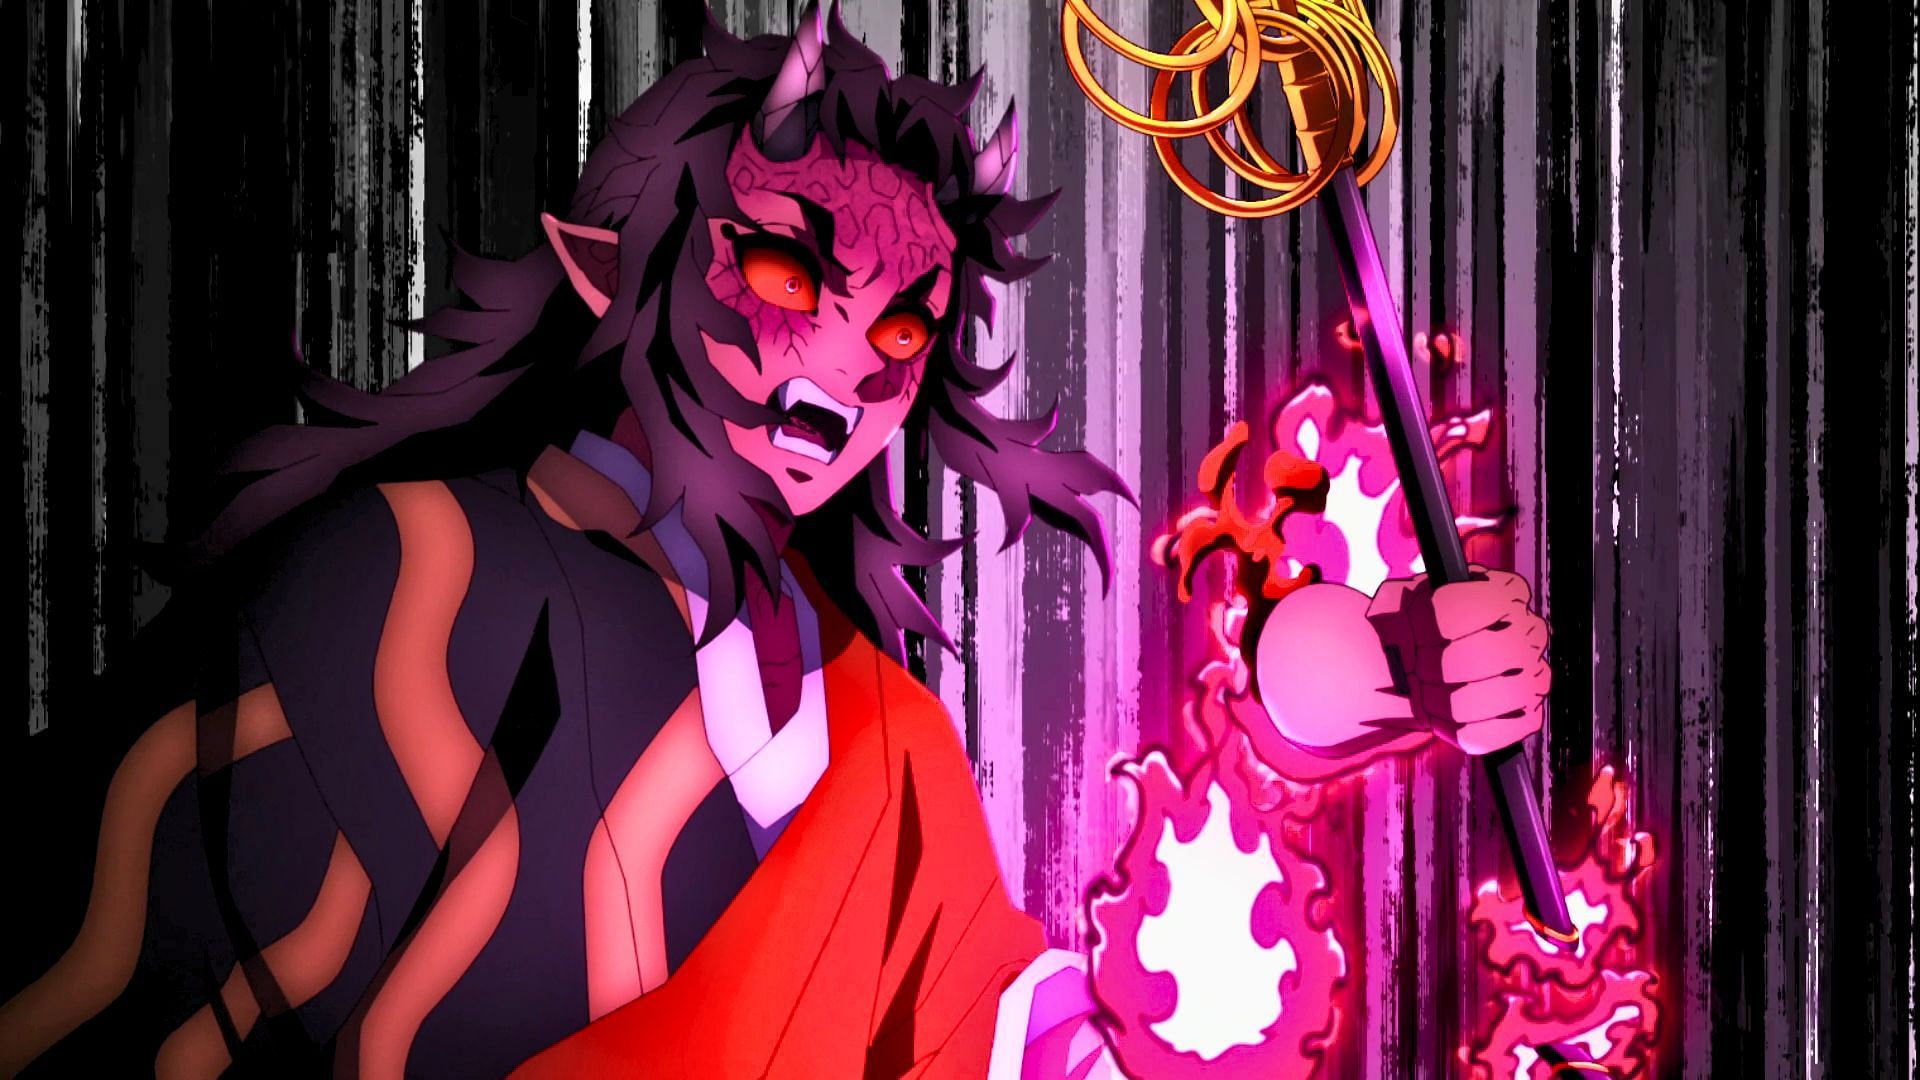 Demon Slayer season 3 episode 10: Manga vs Anime comparison